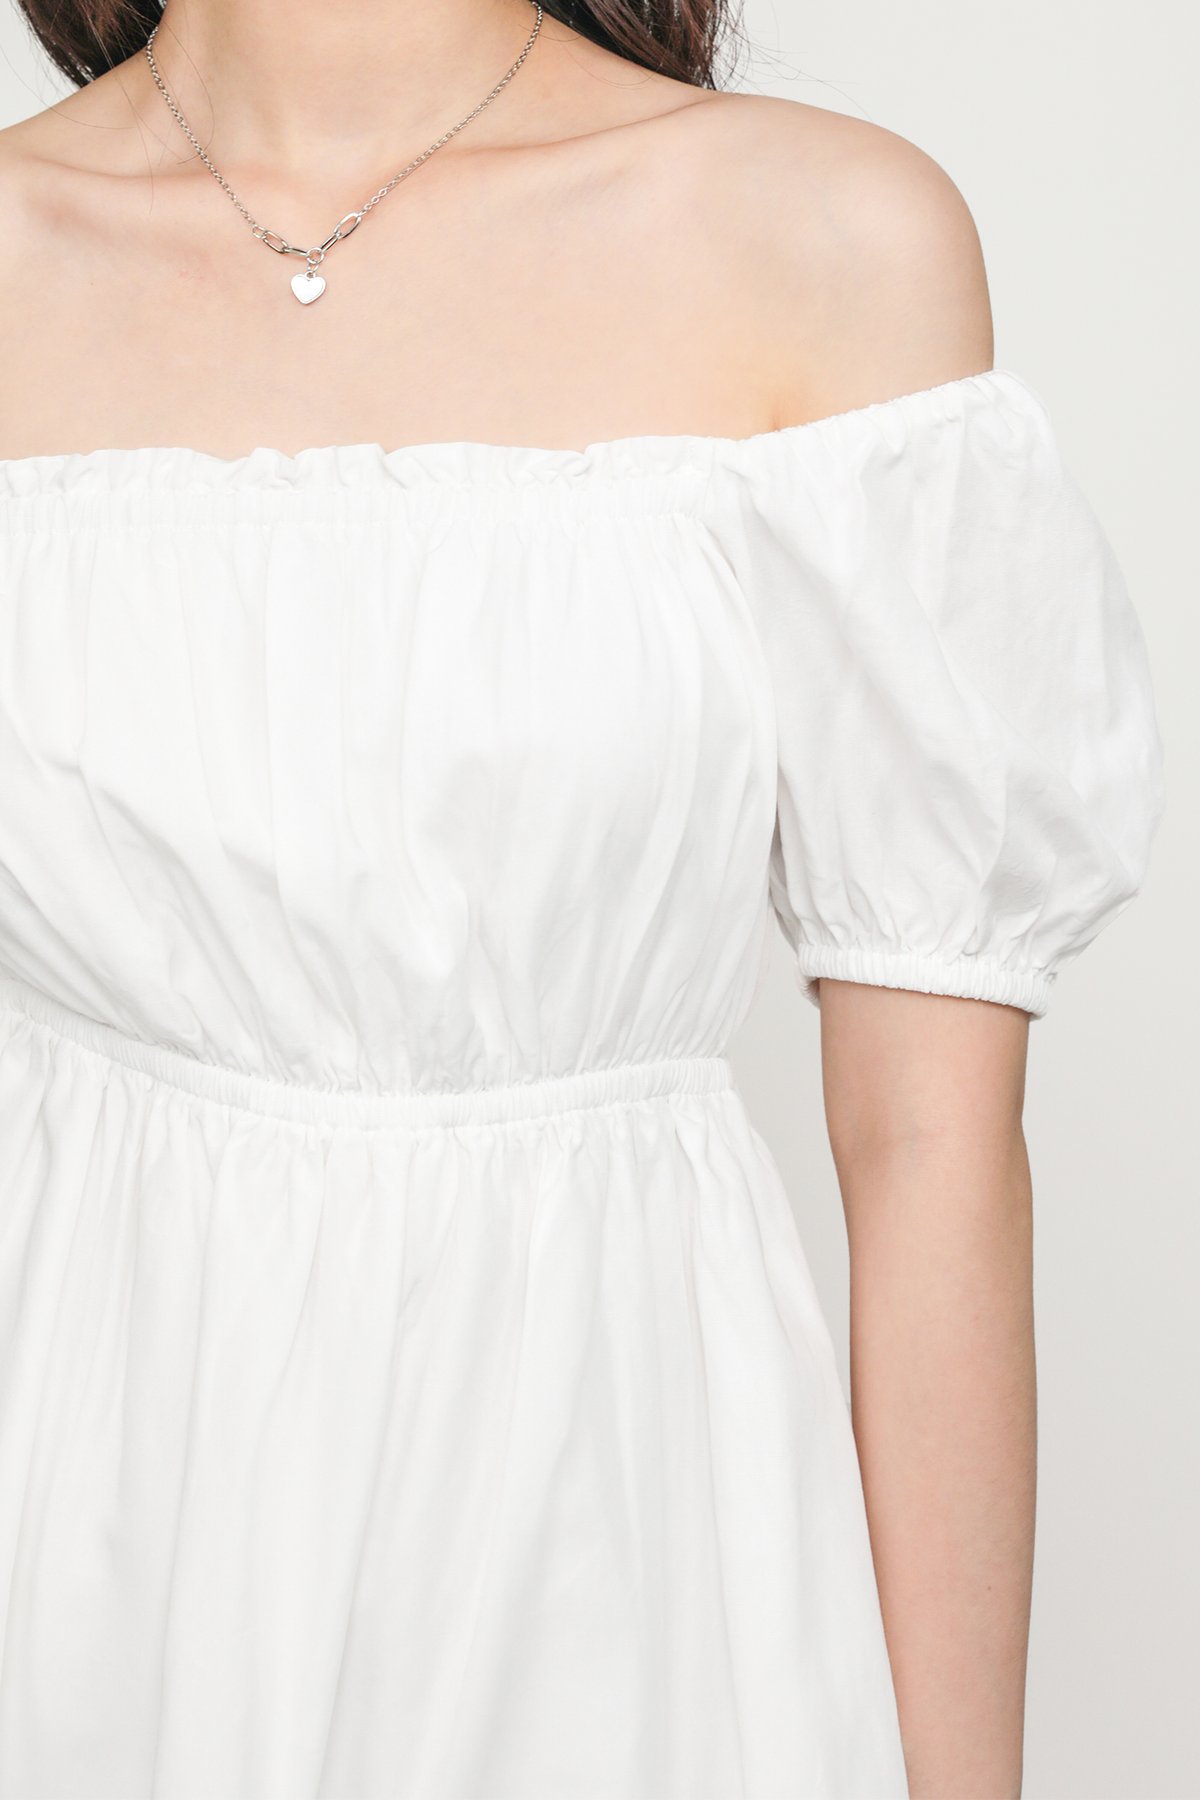 Seraphina Puffy Sleeve Cross Back Dress (White)